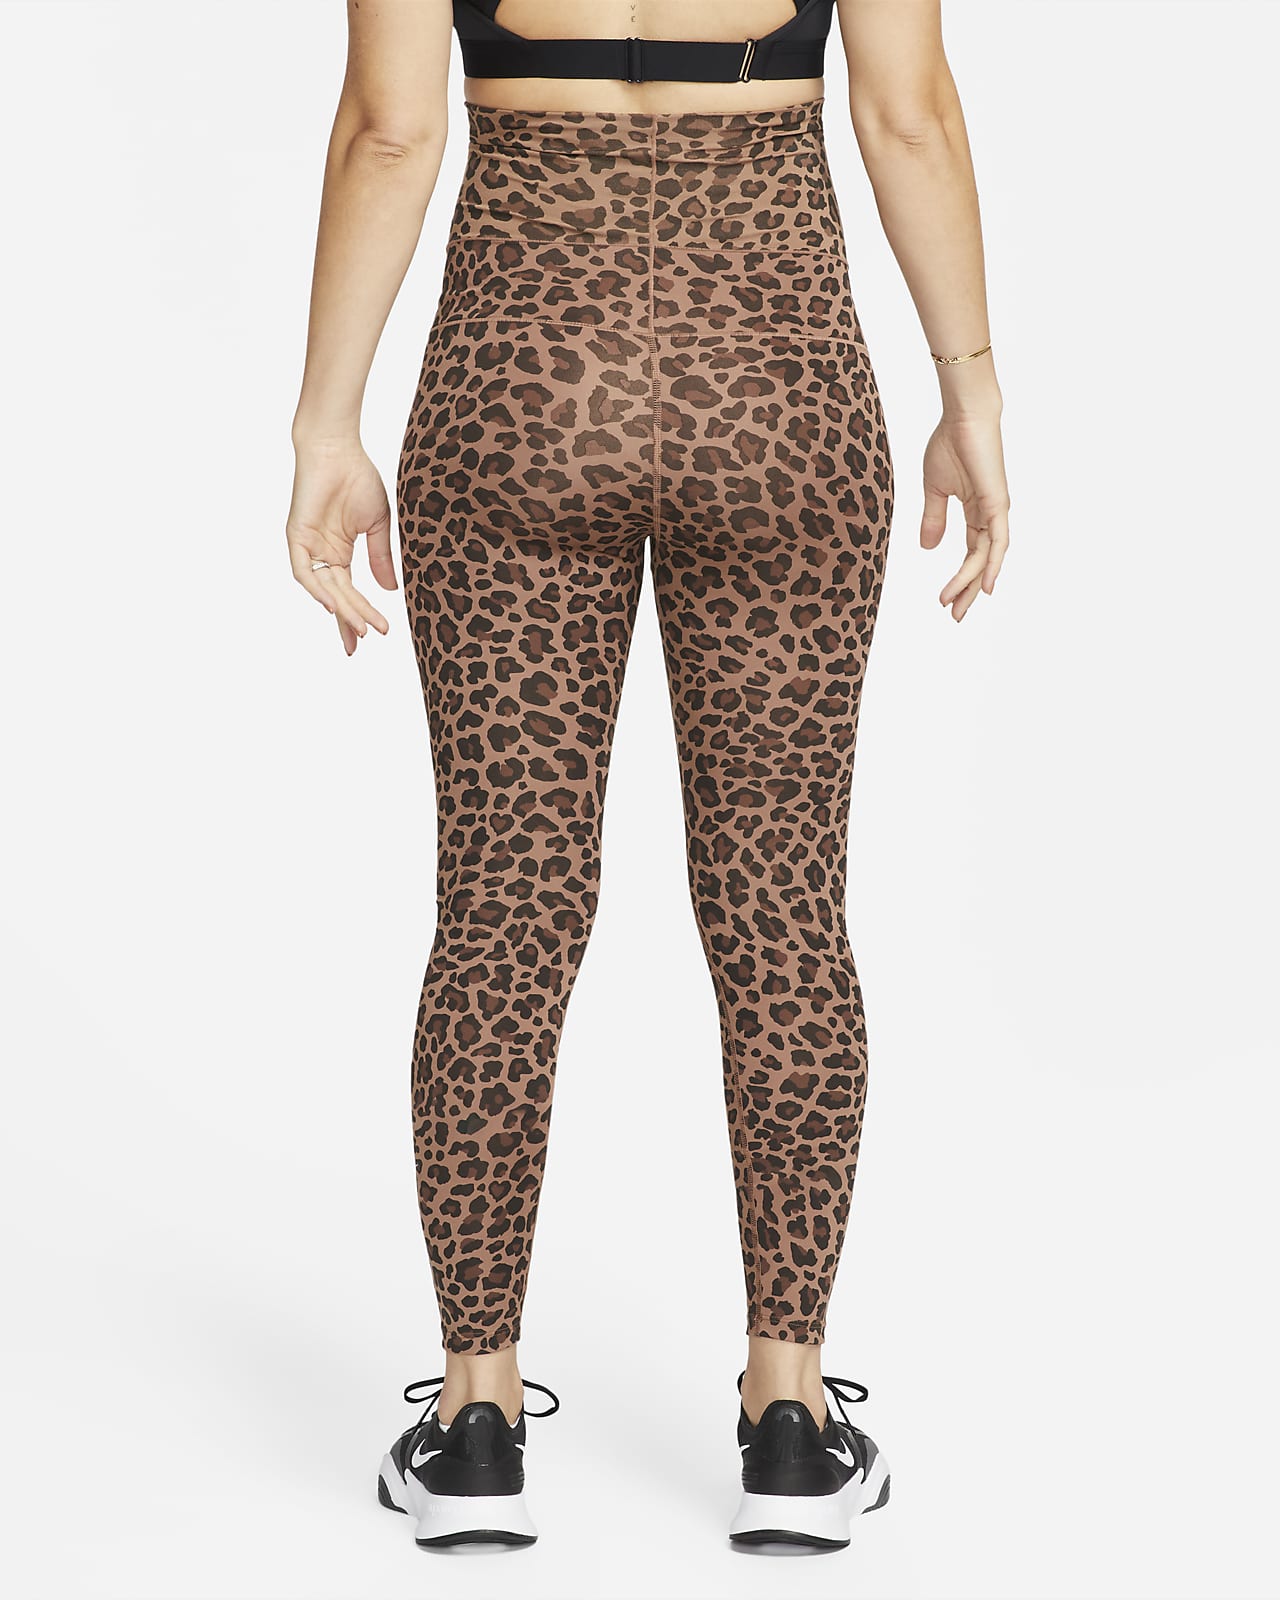 Hub spier Echt niet Nike One (M) Legging met hoge taille en luipaardprint voor dames  (zwangerschapskleding). Nike NL